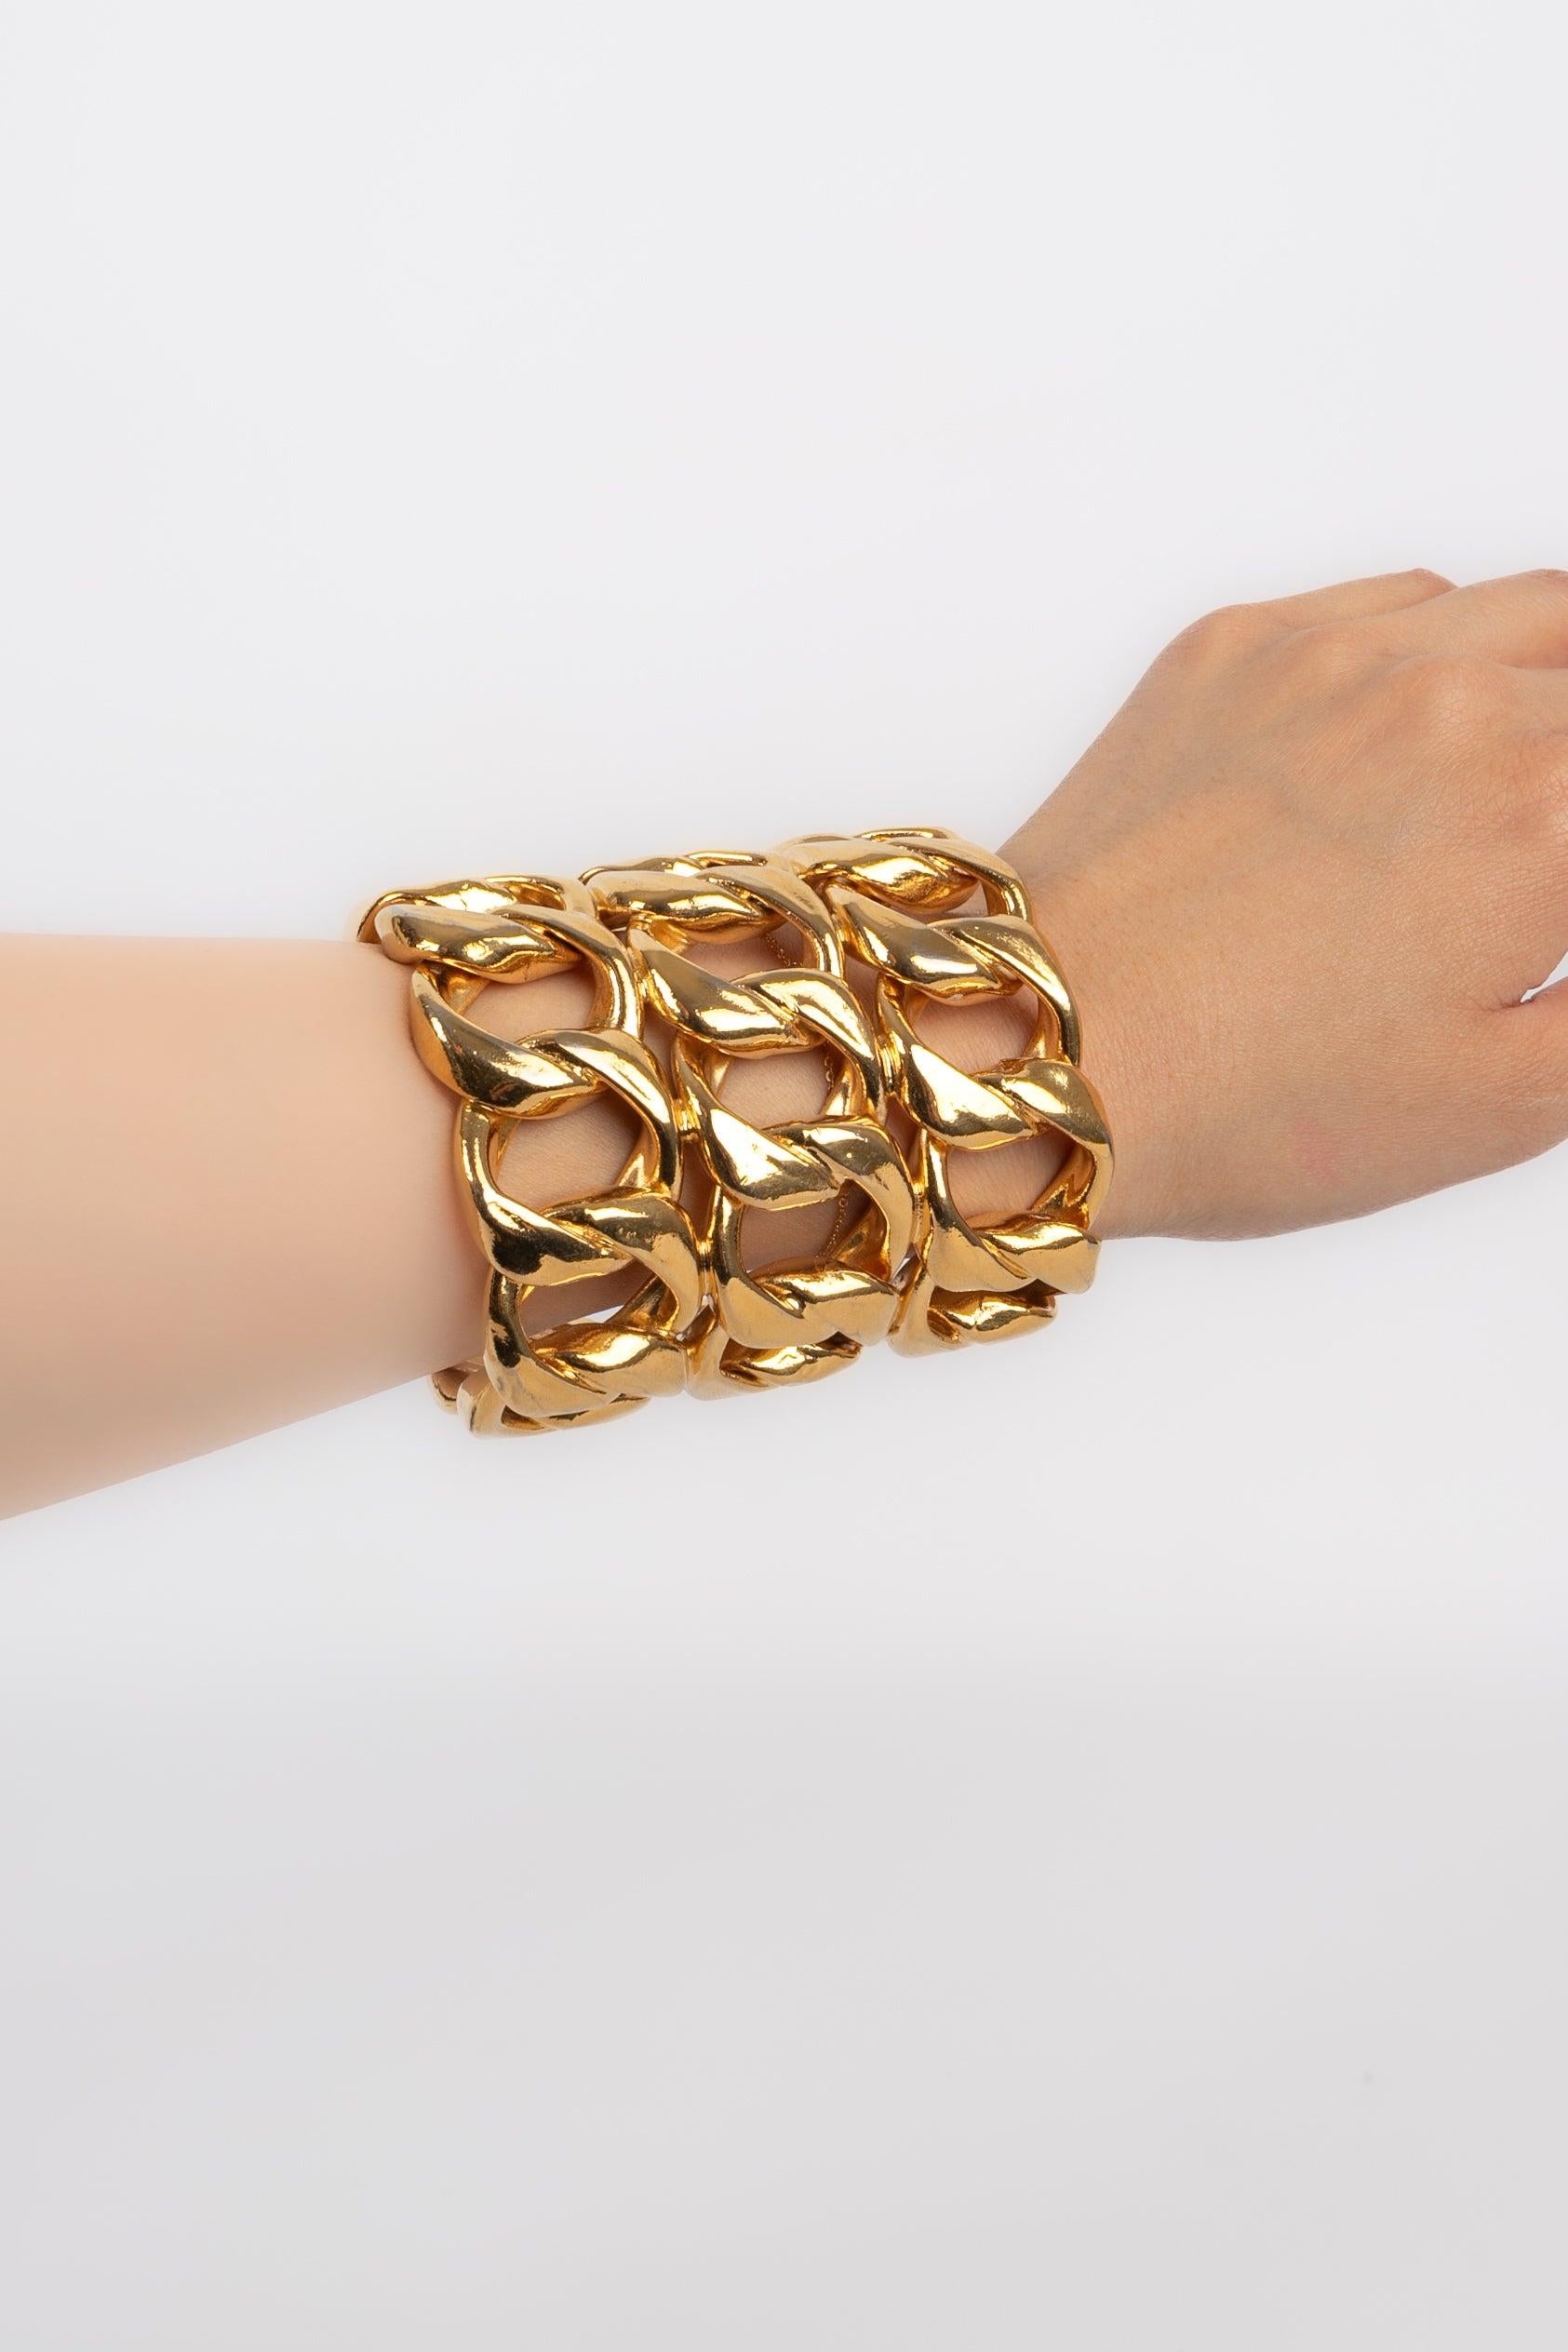 Chanel Golden Metal Chain Cuff Bracelet, 2003 For Sale 2